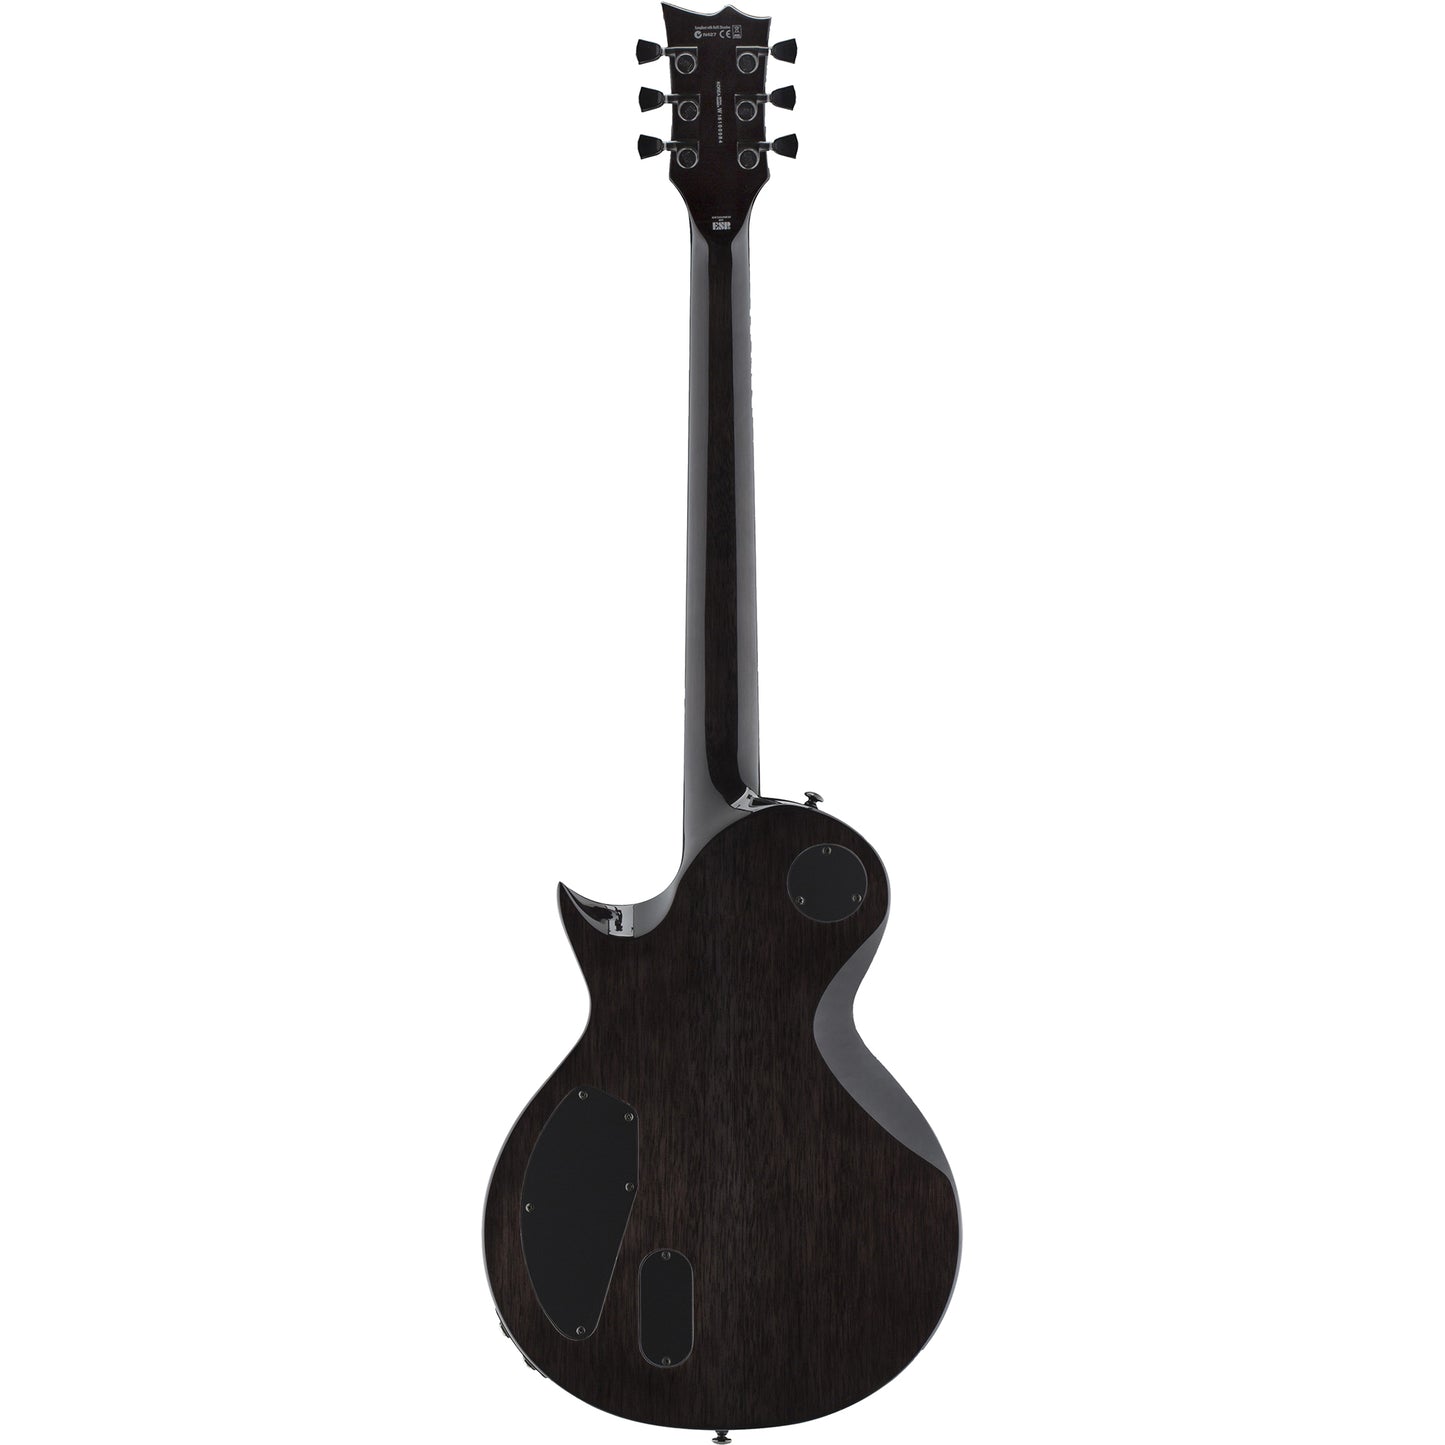 ESP LTD EC-1000 Piezo Electric Guitar, See Thru Black